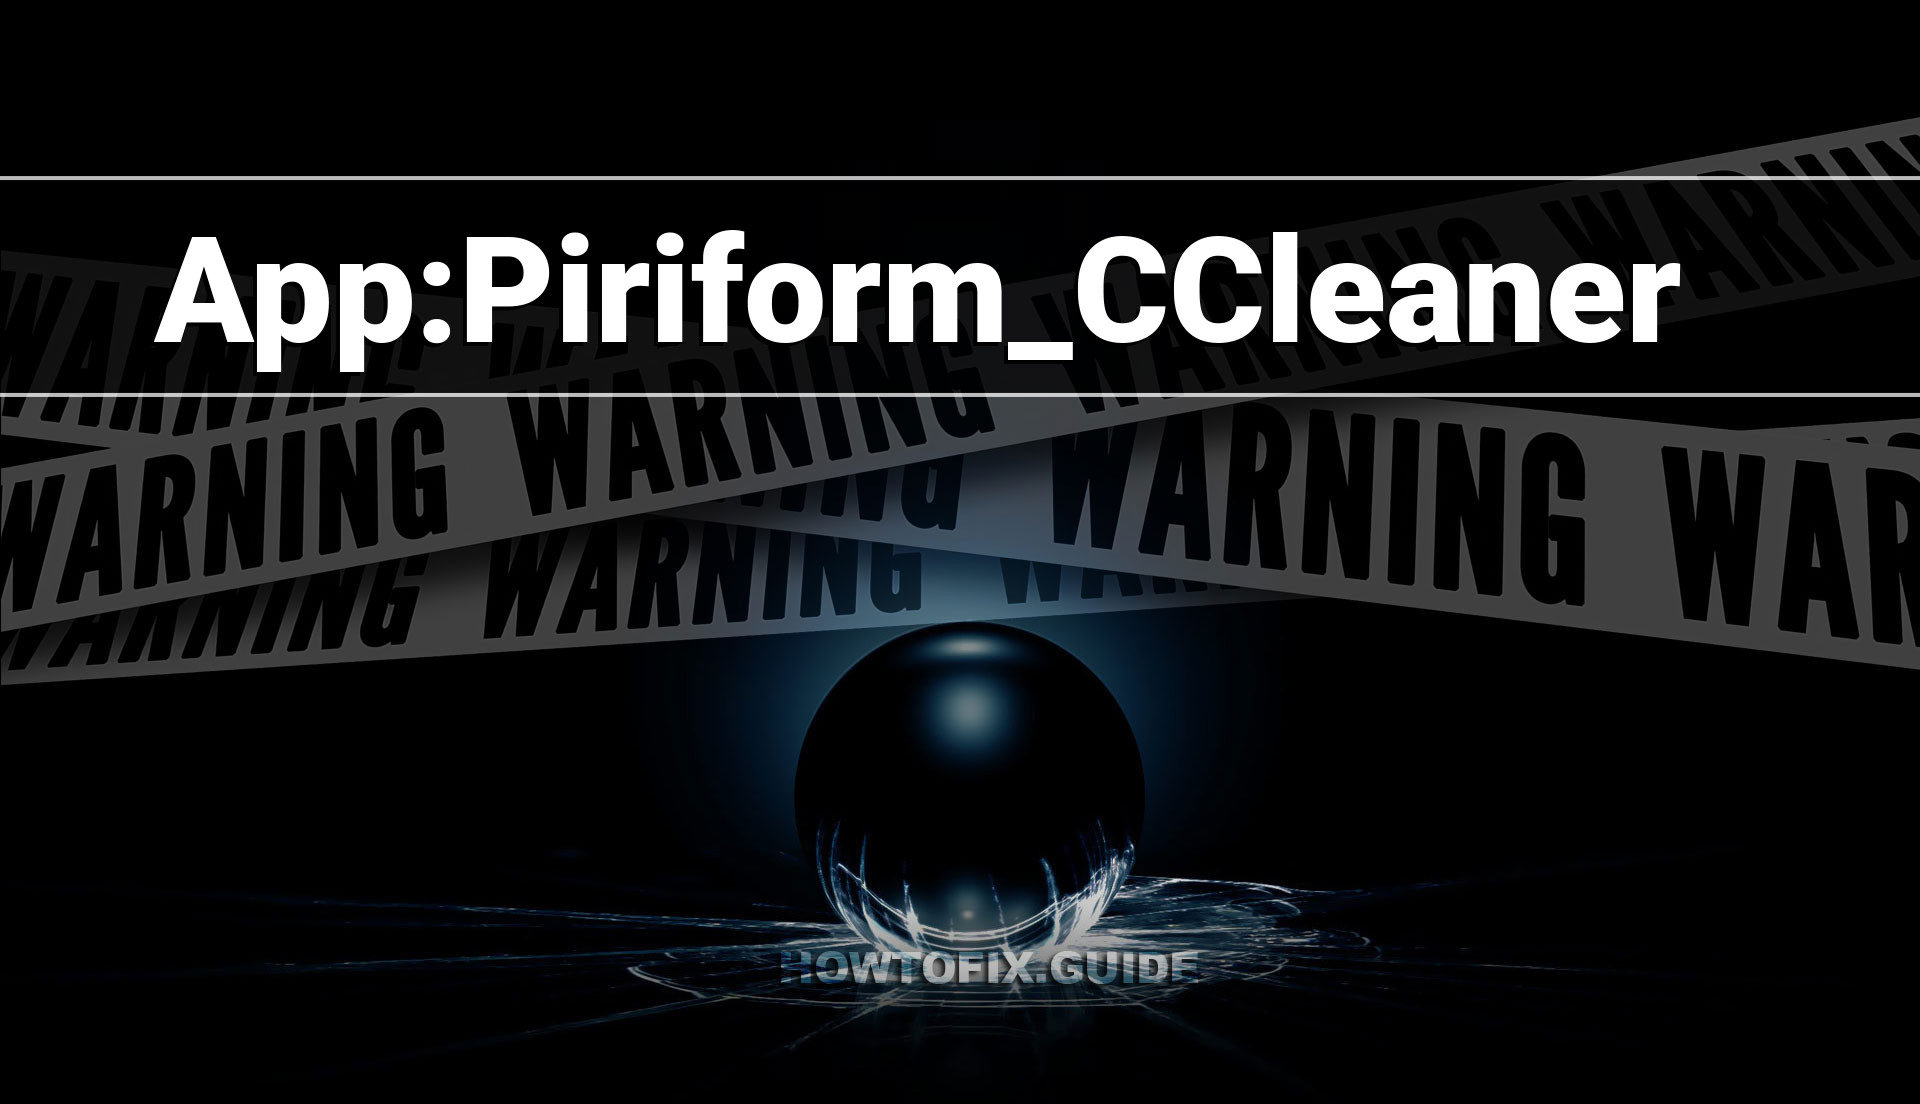 pirform ccleaner malware